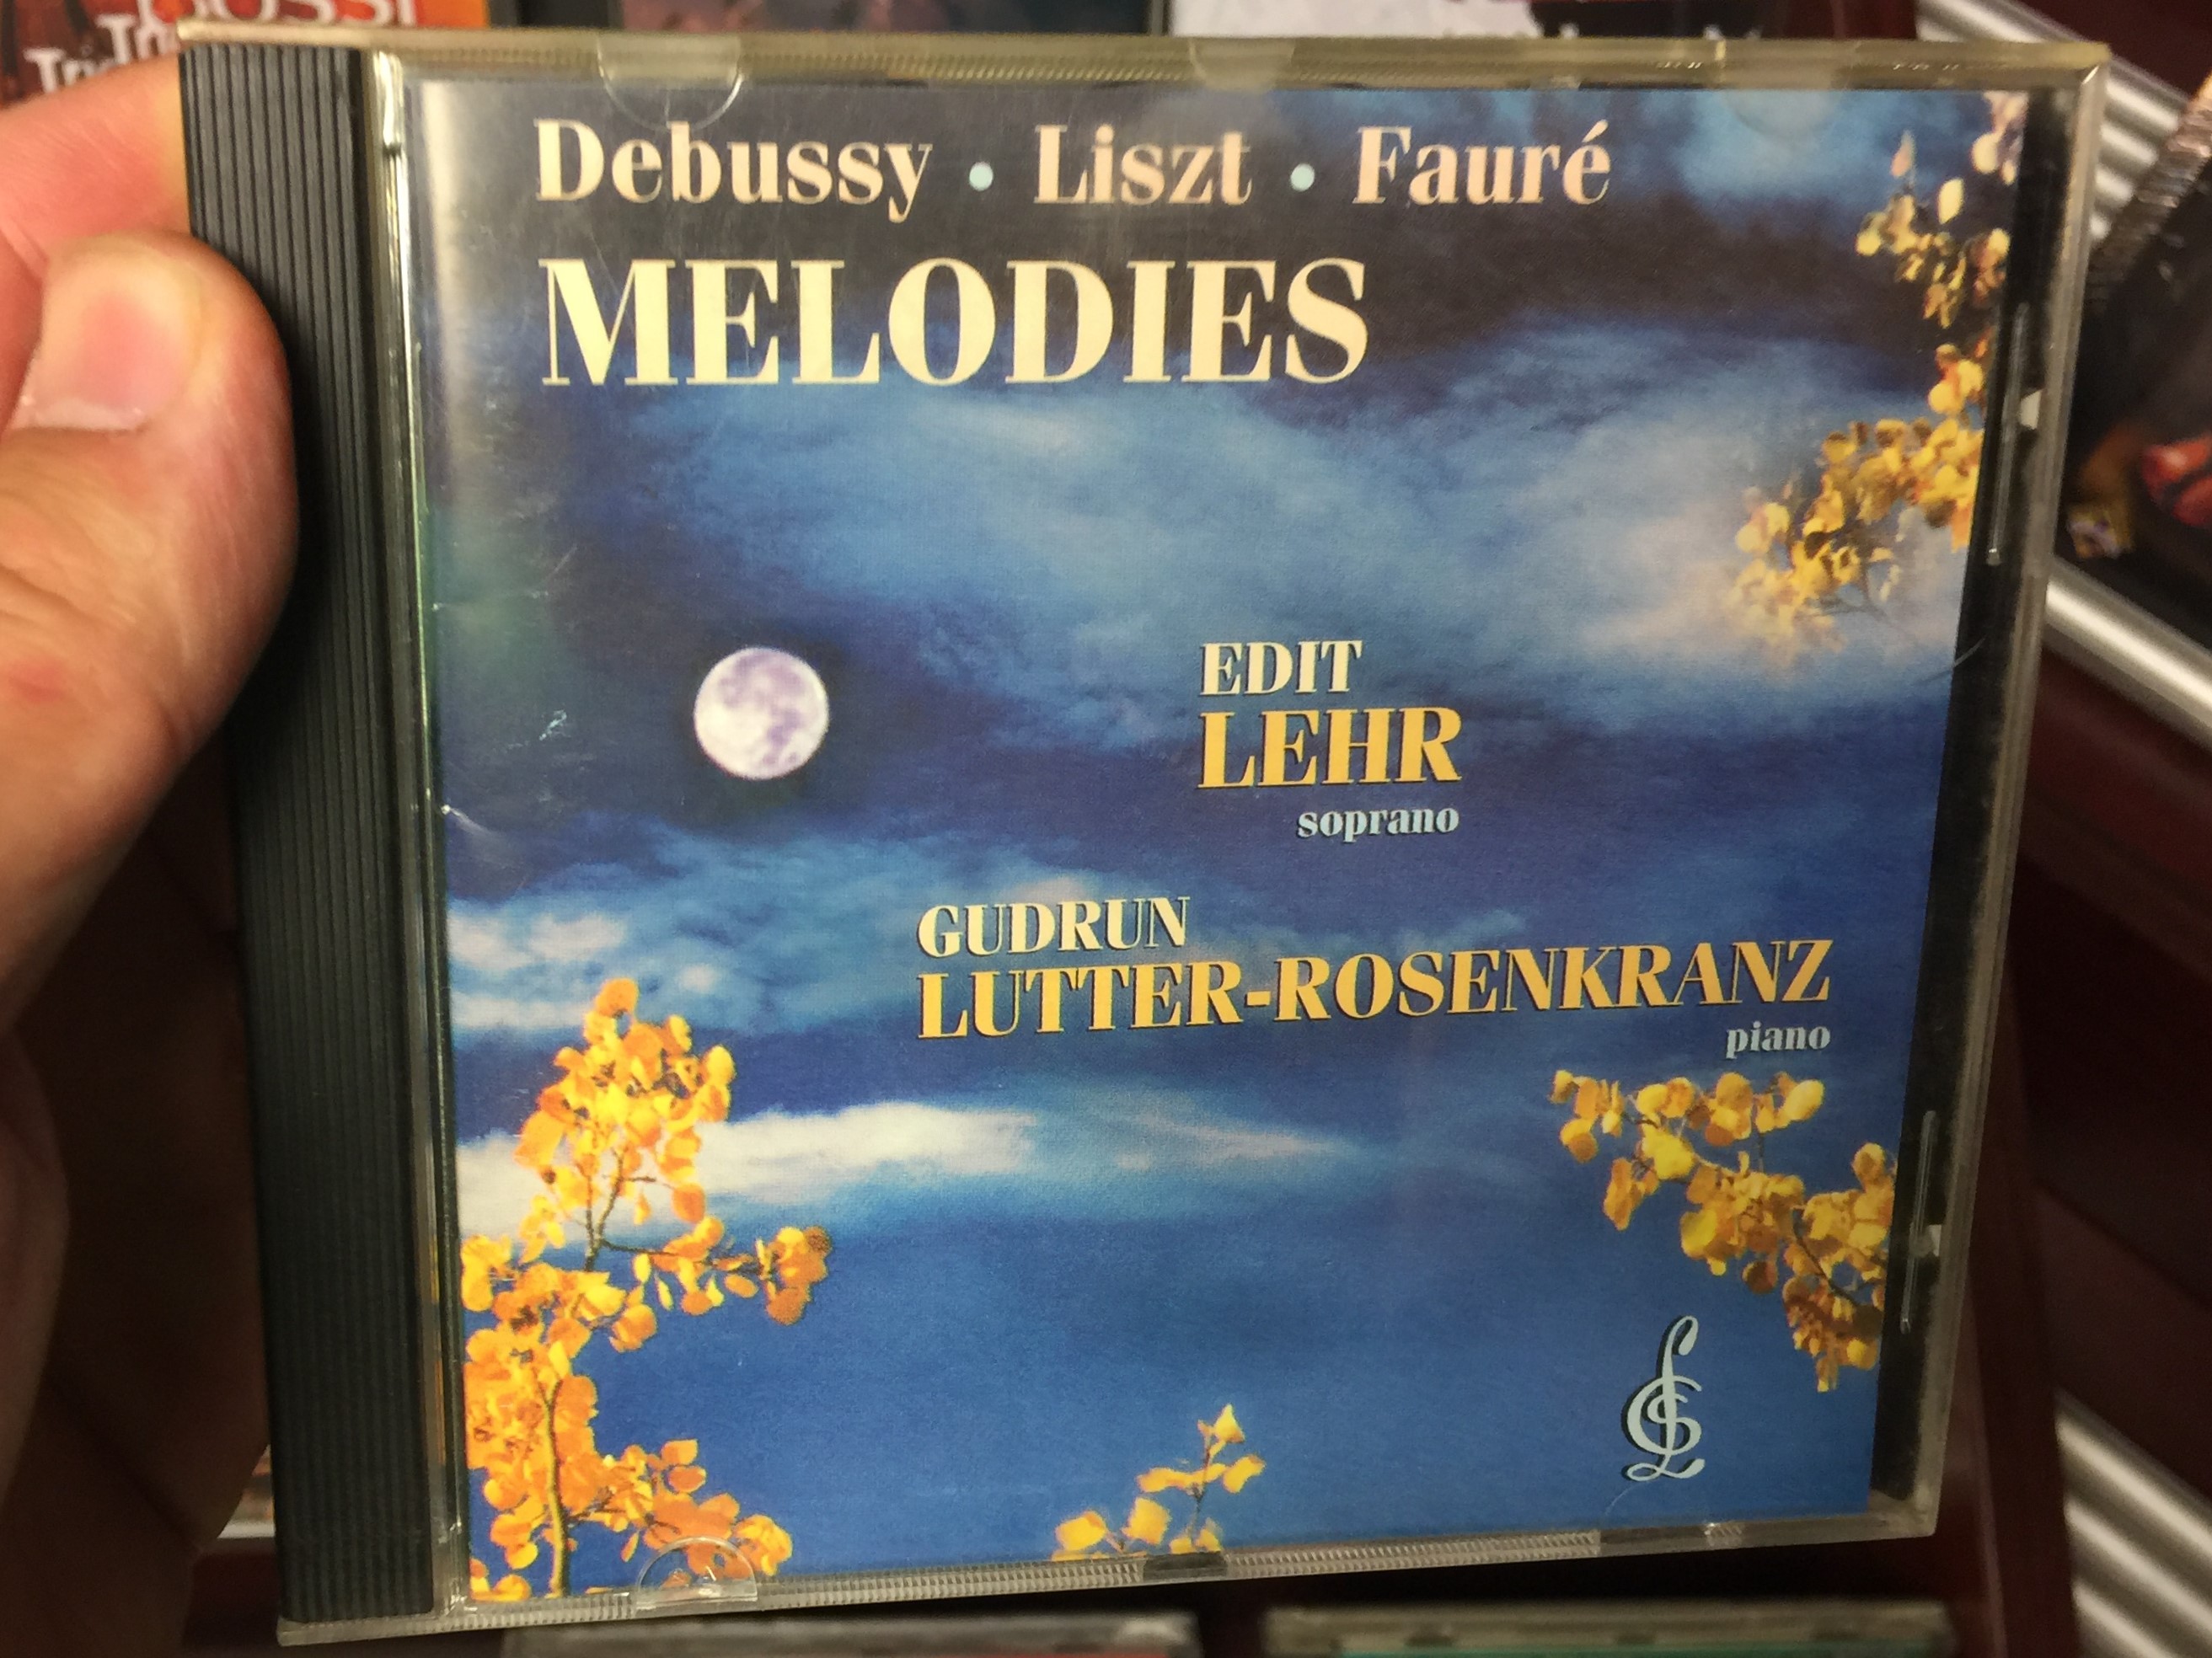 debussy-liszt-faure-melodies-edit-lehr-soprano-gudrun-lutter-rosenkranz-piano-cs-l-ltd.-audio-cd-2002-stereo-br-0253-1-.jpg